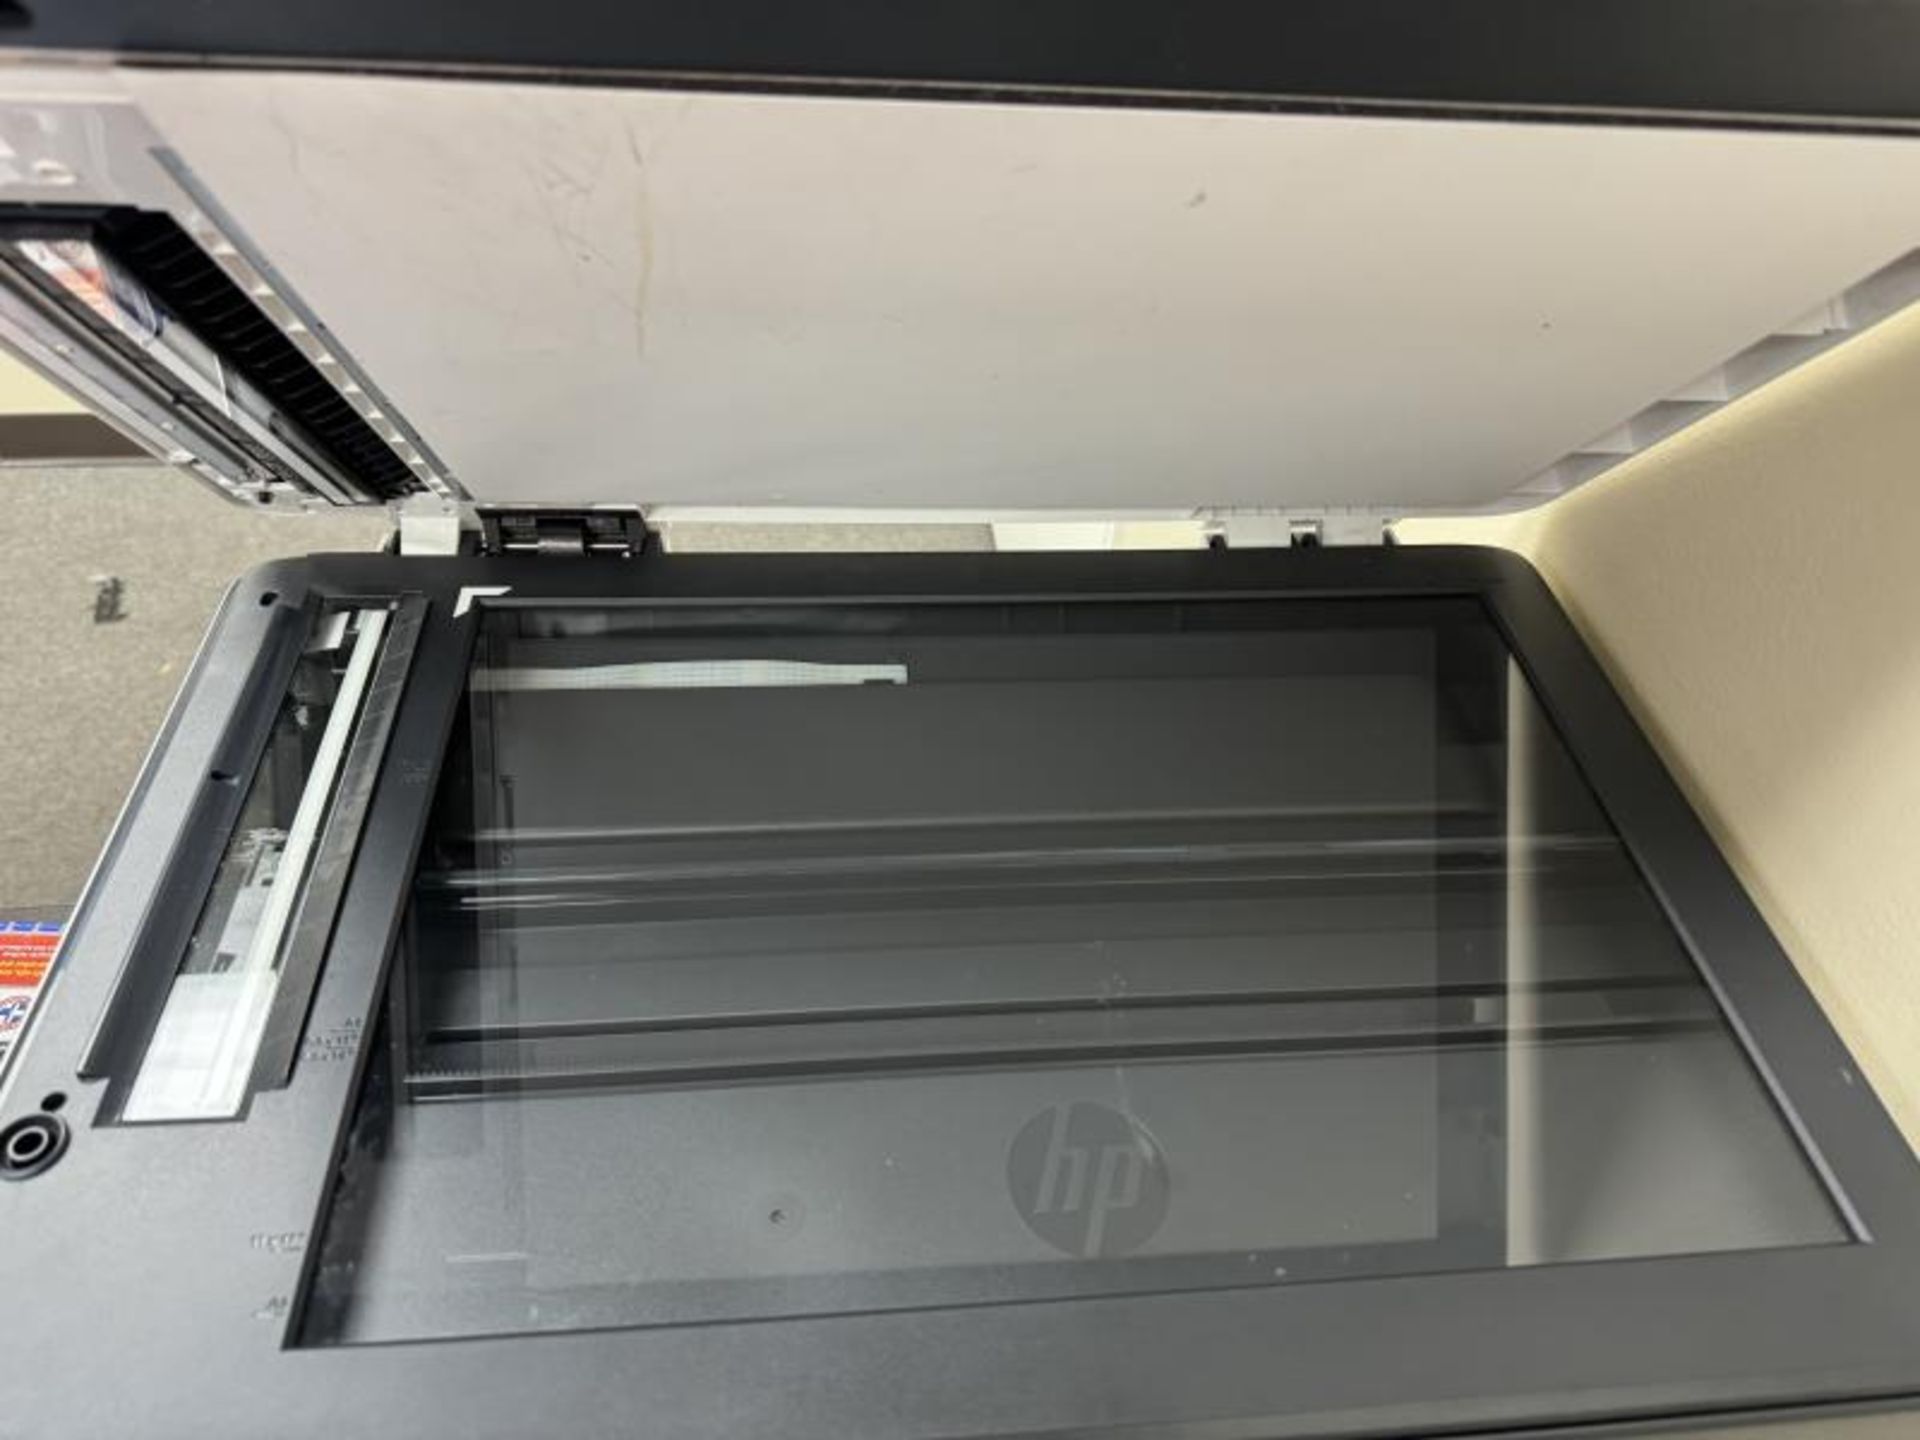 HP OfficeJet Pro7740 Printer - Image 2 of 4